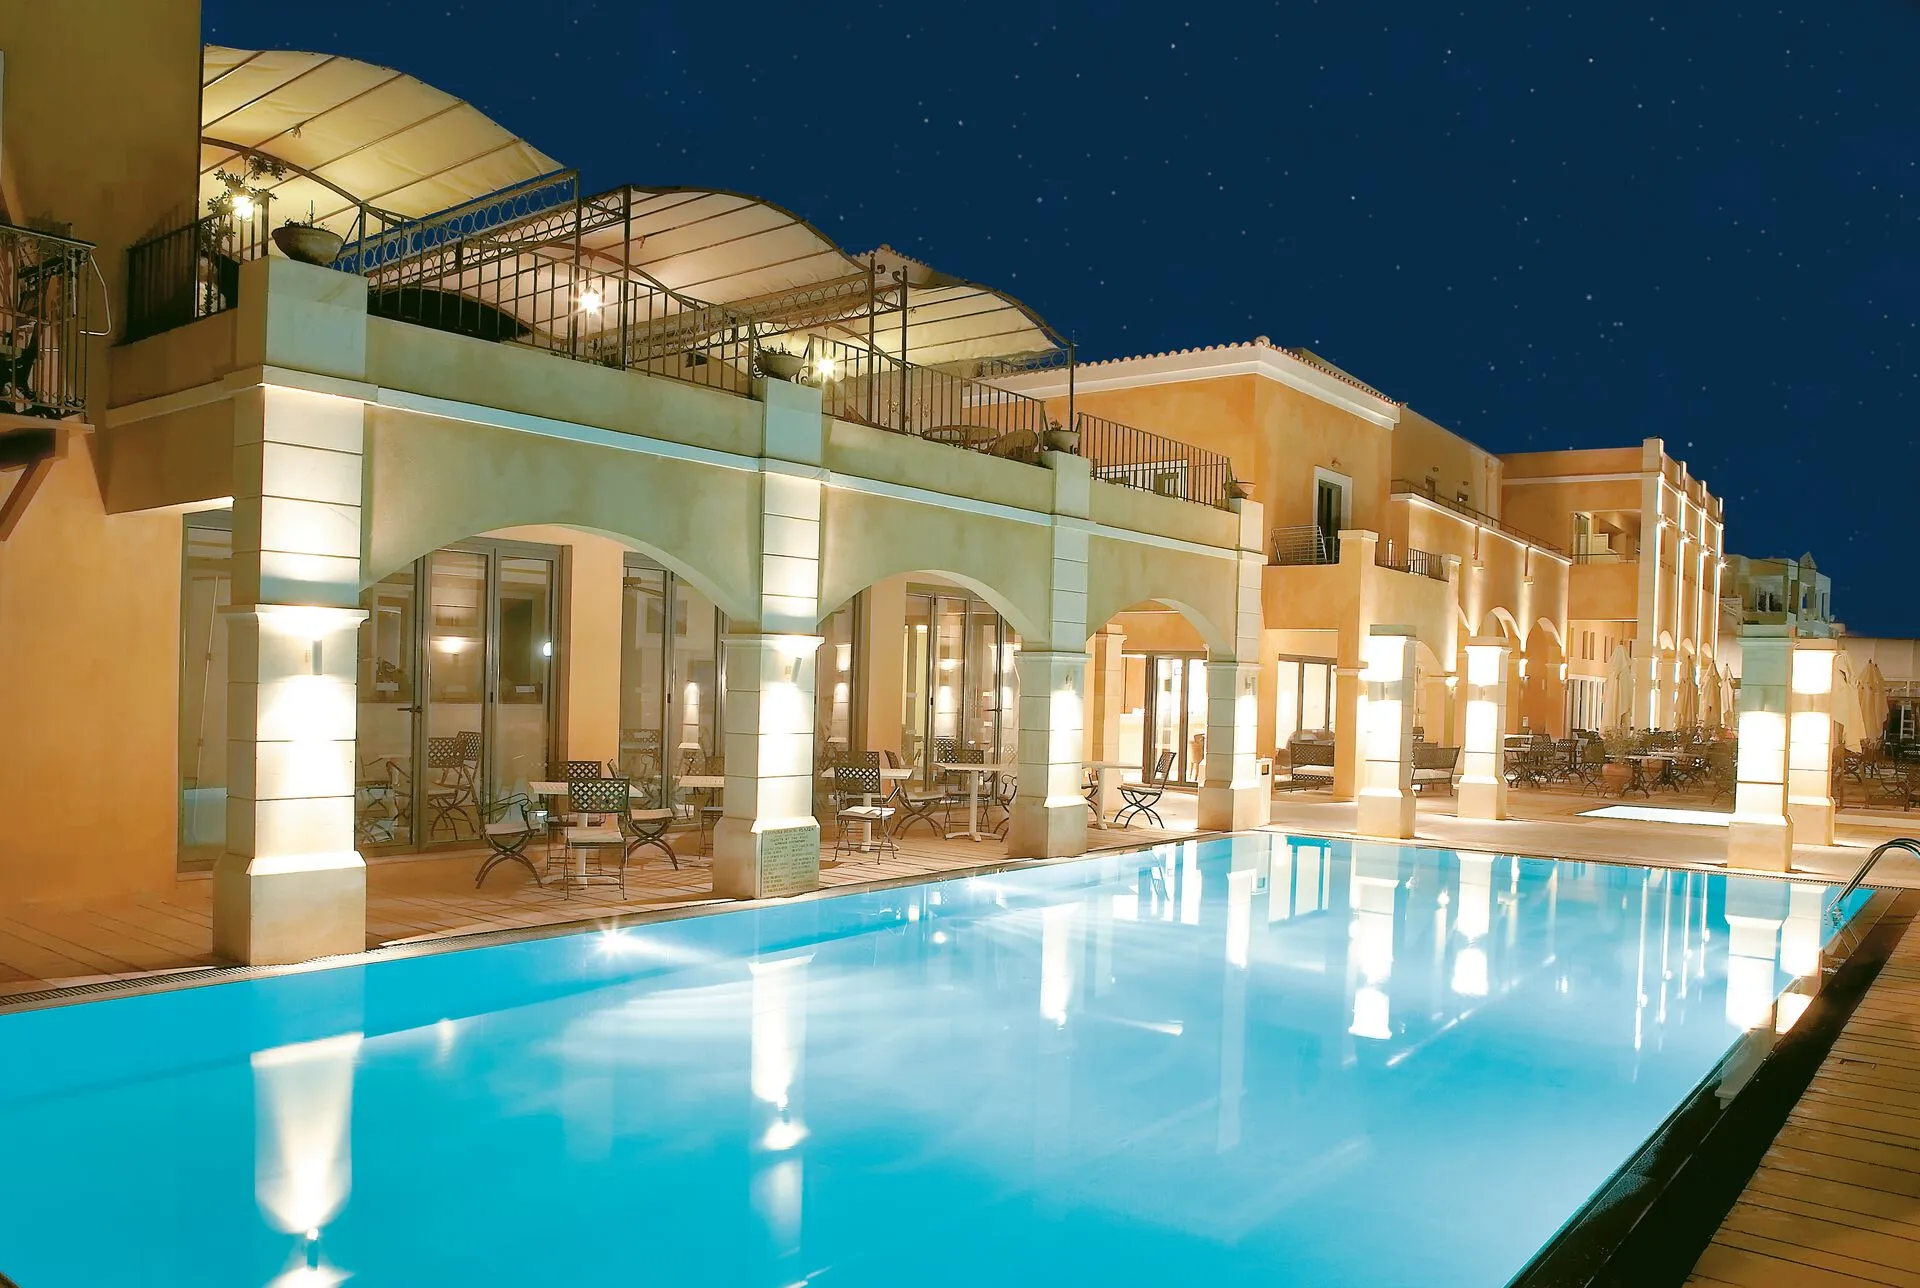 Crète - Rethymnon - Grèce - Iles grecques - Hotel Grecotel Plaza Beach House 4*